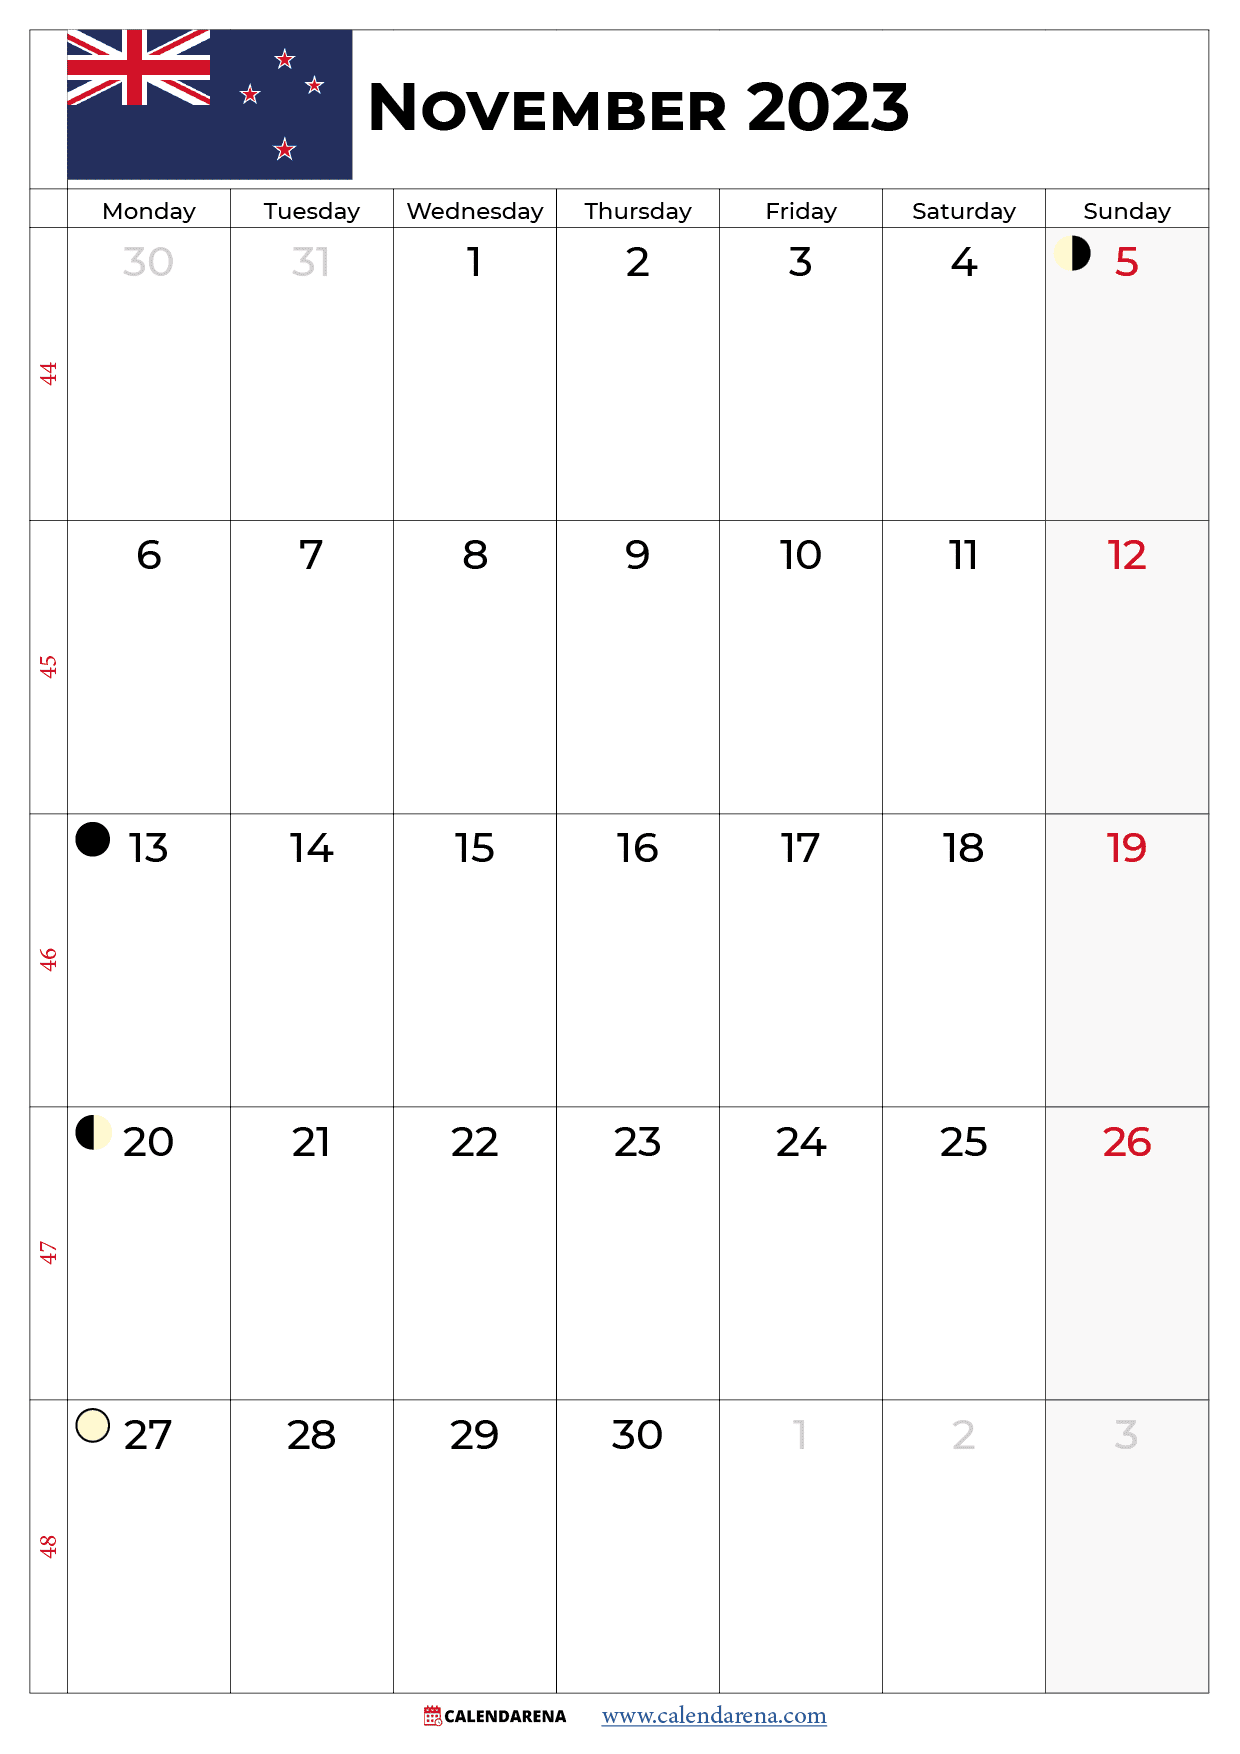 calendar november 2023 new zealand